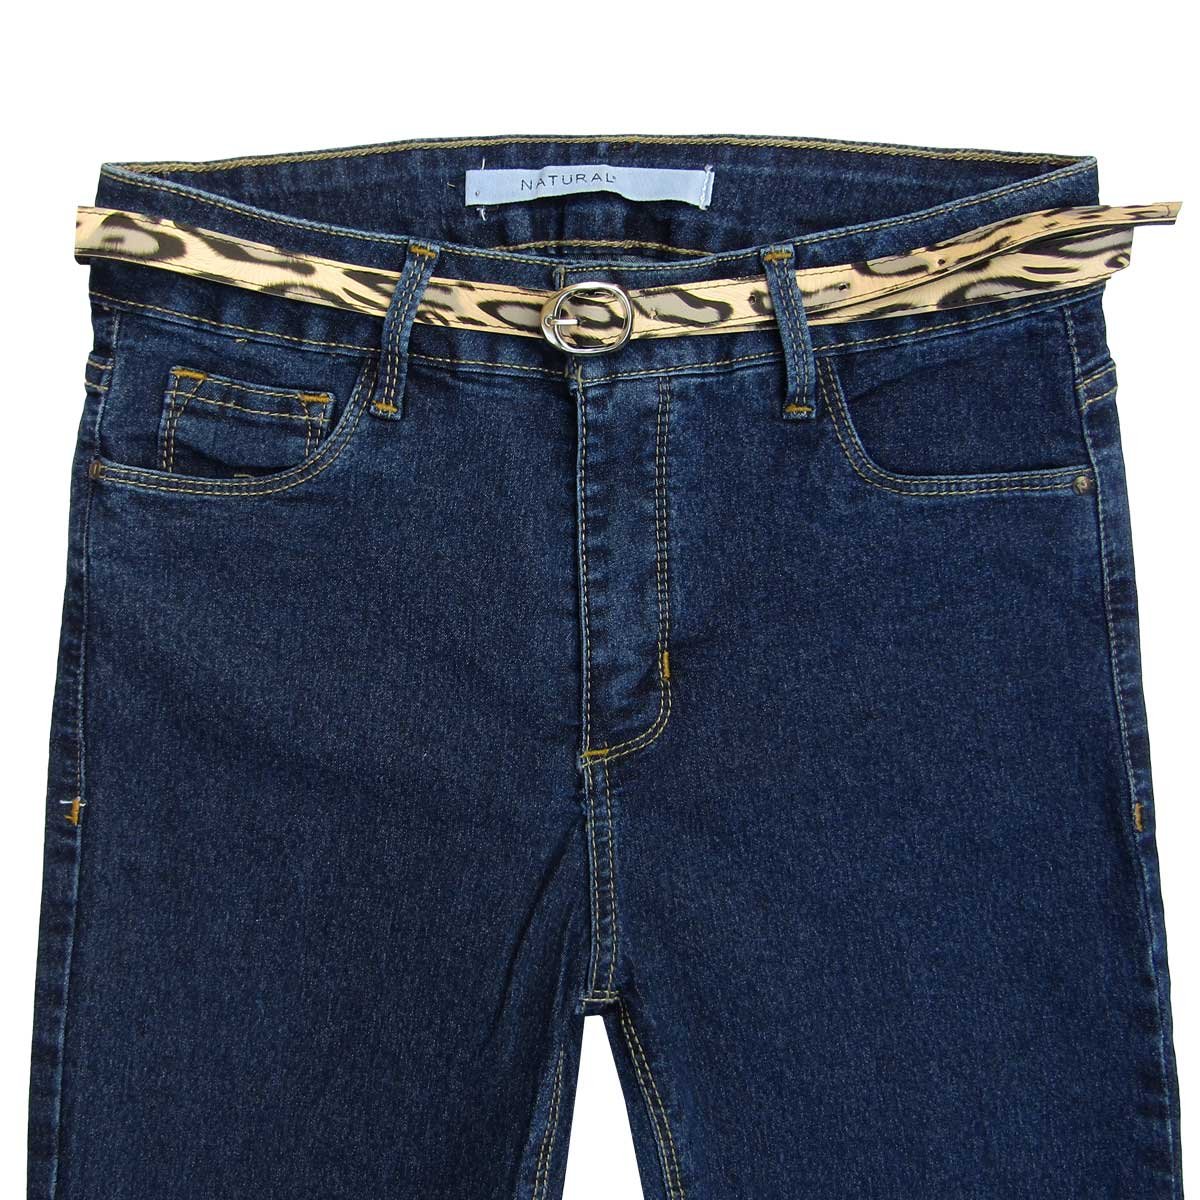 Jeans con Cintur&oacute;n Animal Print Natural